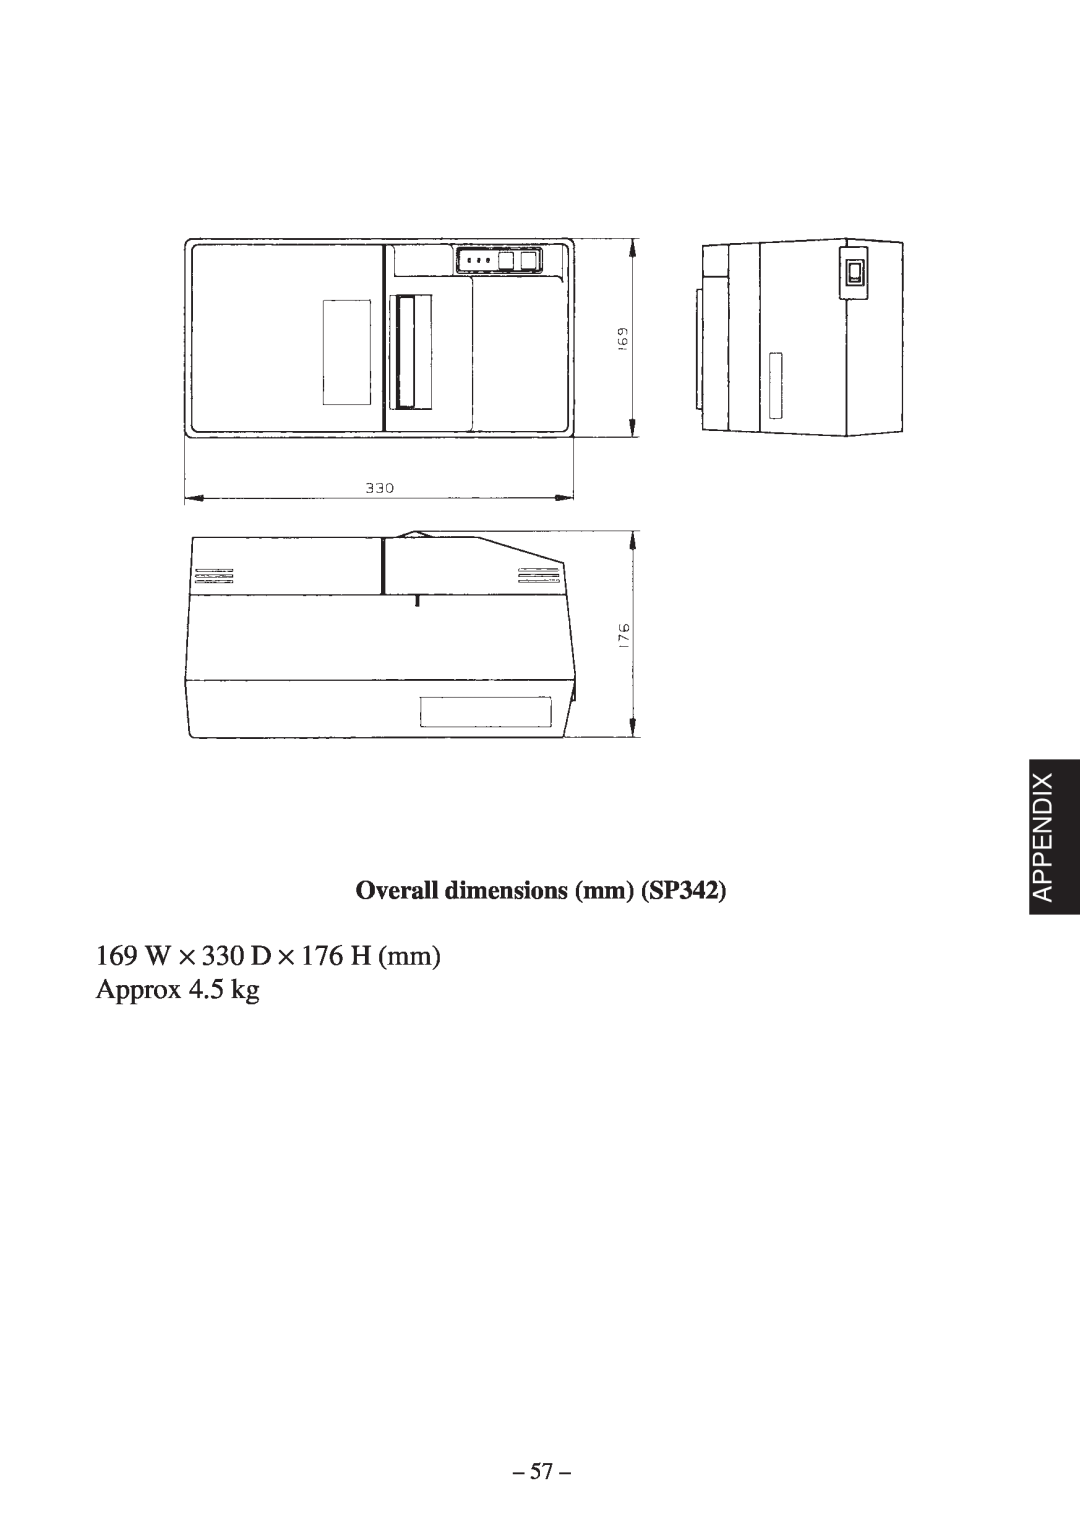 Star Micronics SP342F-A, SP312F manual 169 W × 330 D × 176 H mm Approx 4.5 kg, Overall dimensions mm SP342, Appendix 